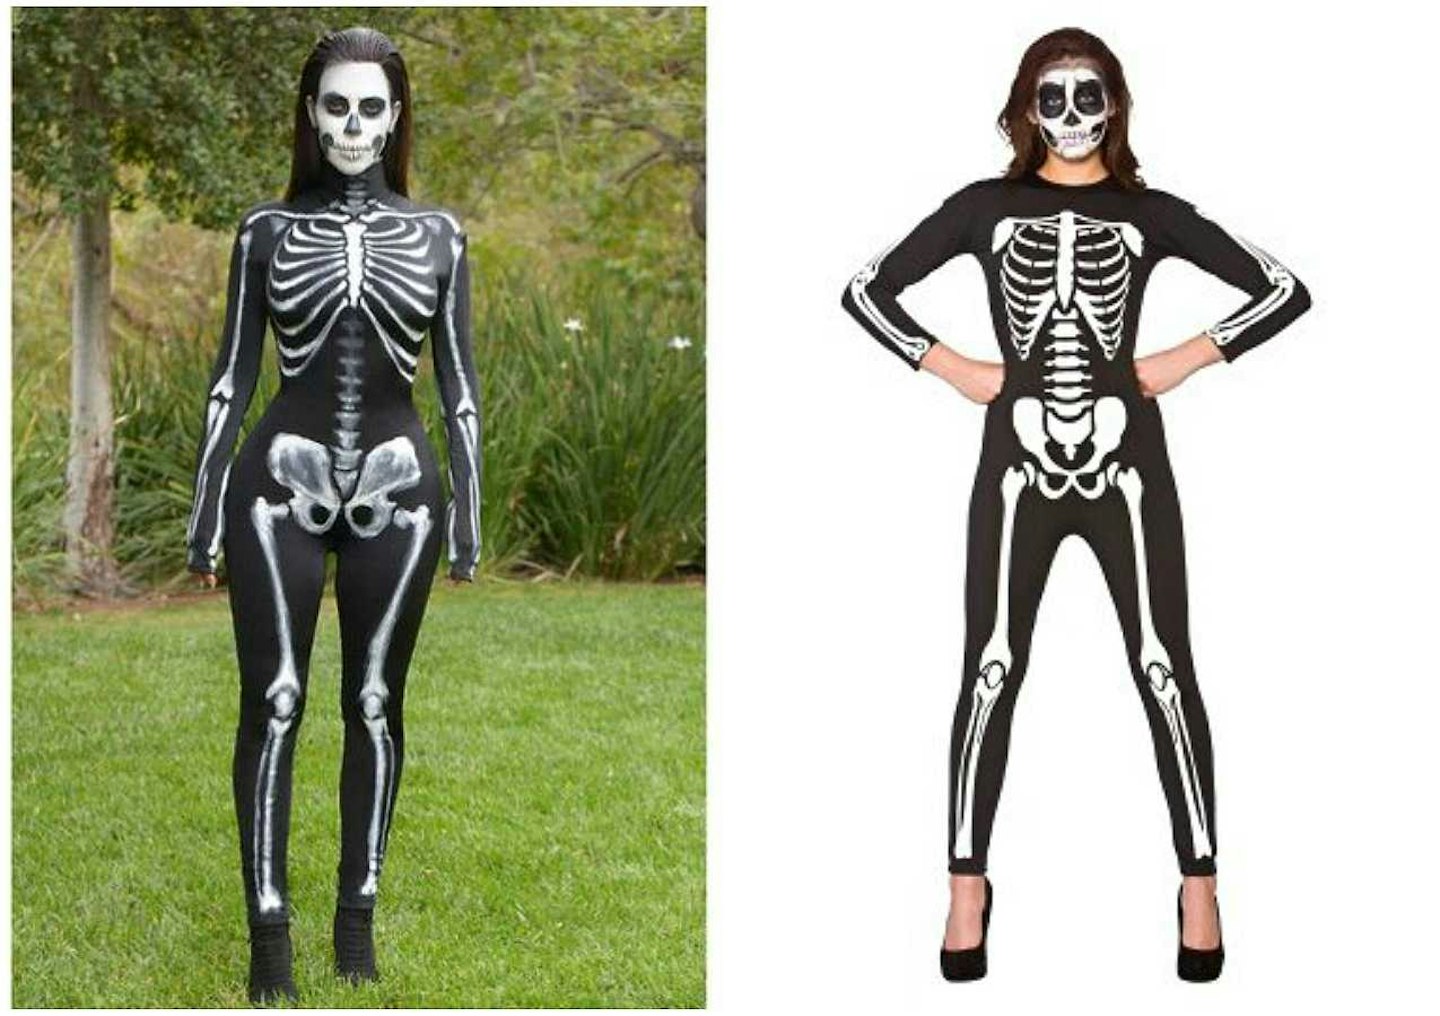 Kim Kardashian as a skeleton